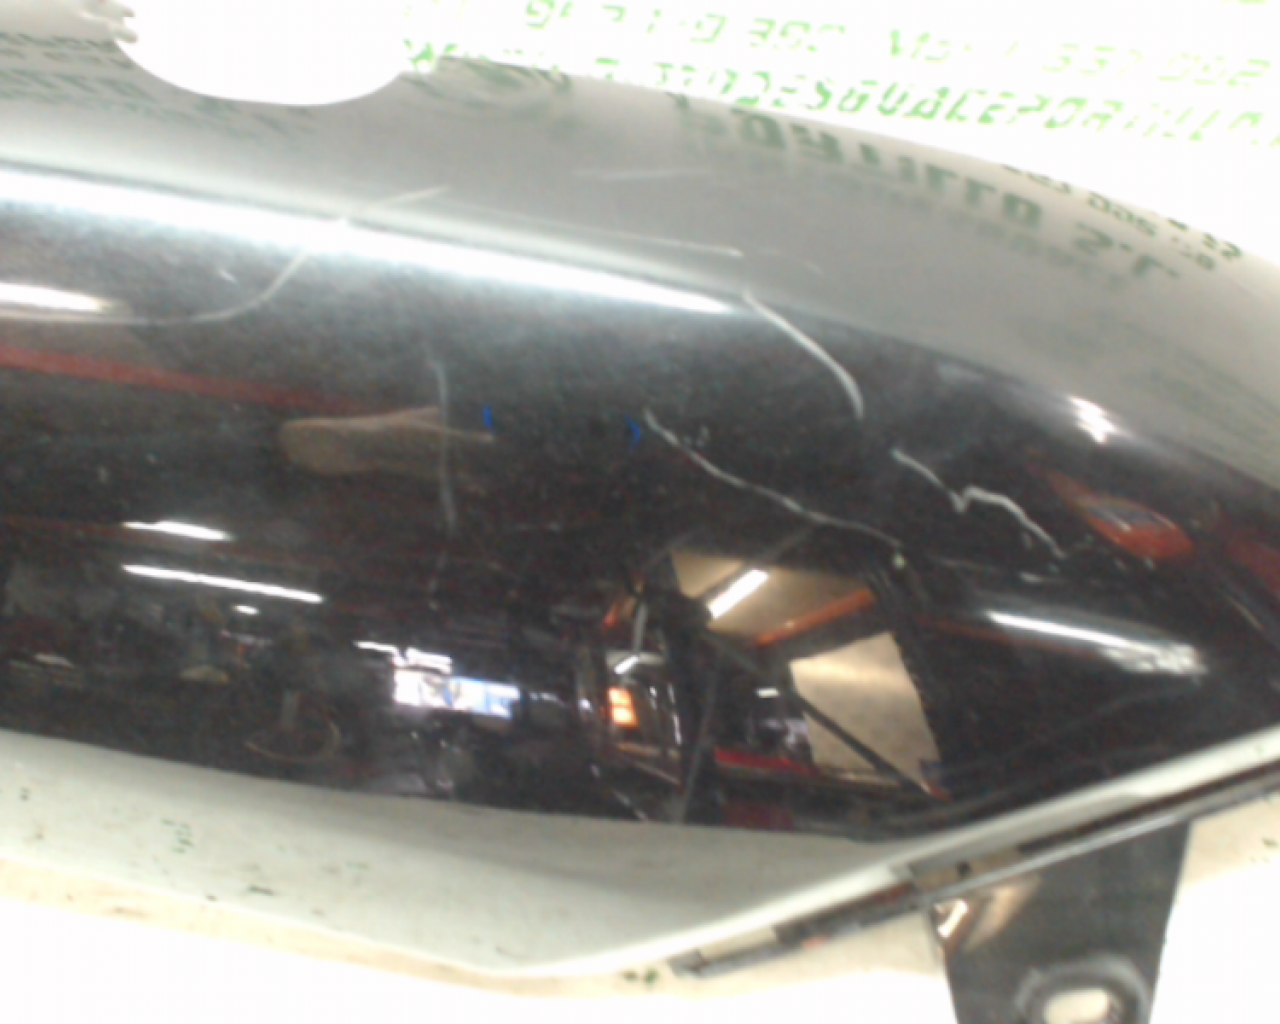 Carcasa lateral trasera derecha Yamaha Xcity 250 (2010-2012)